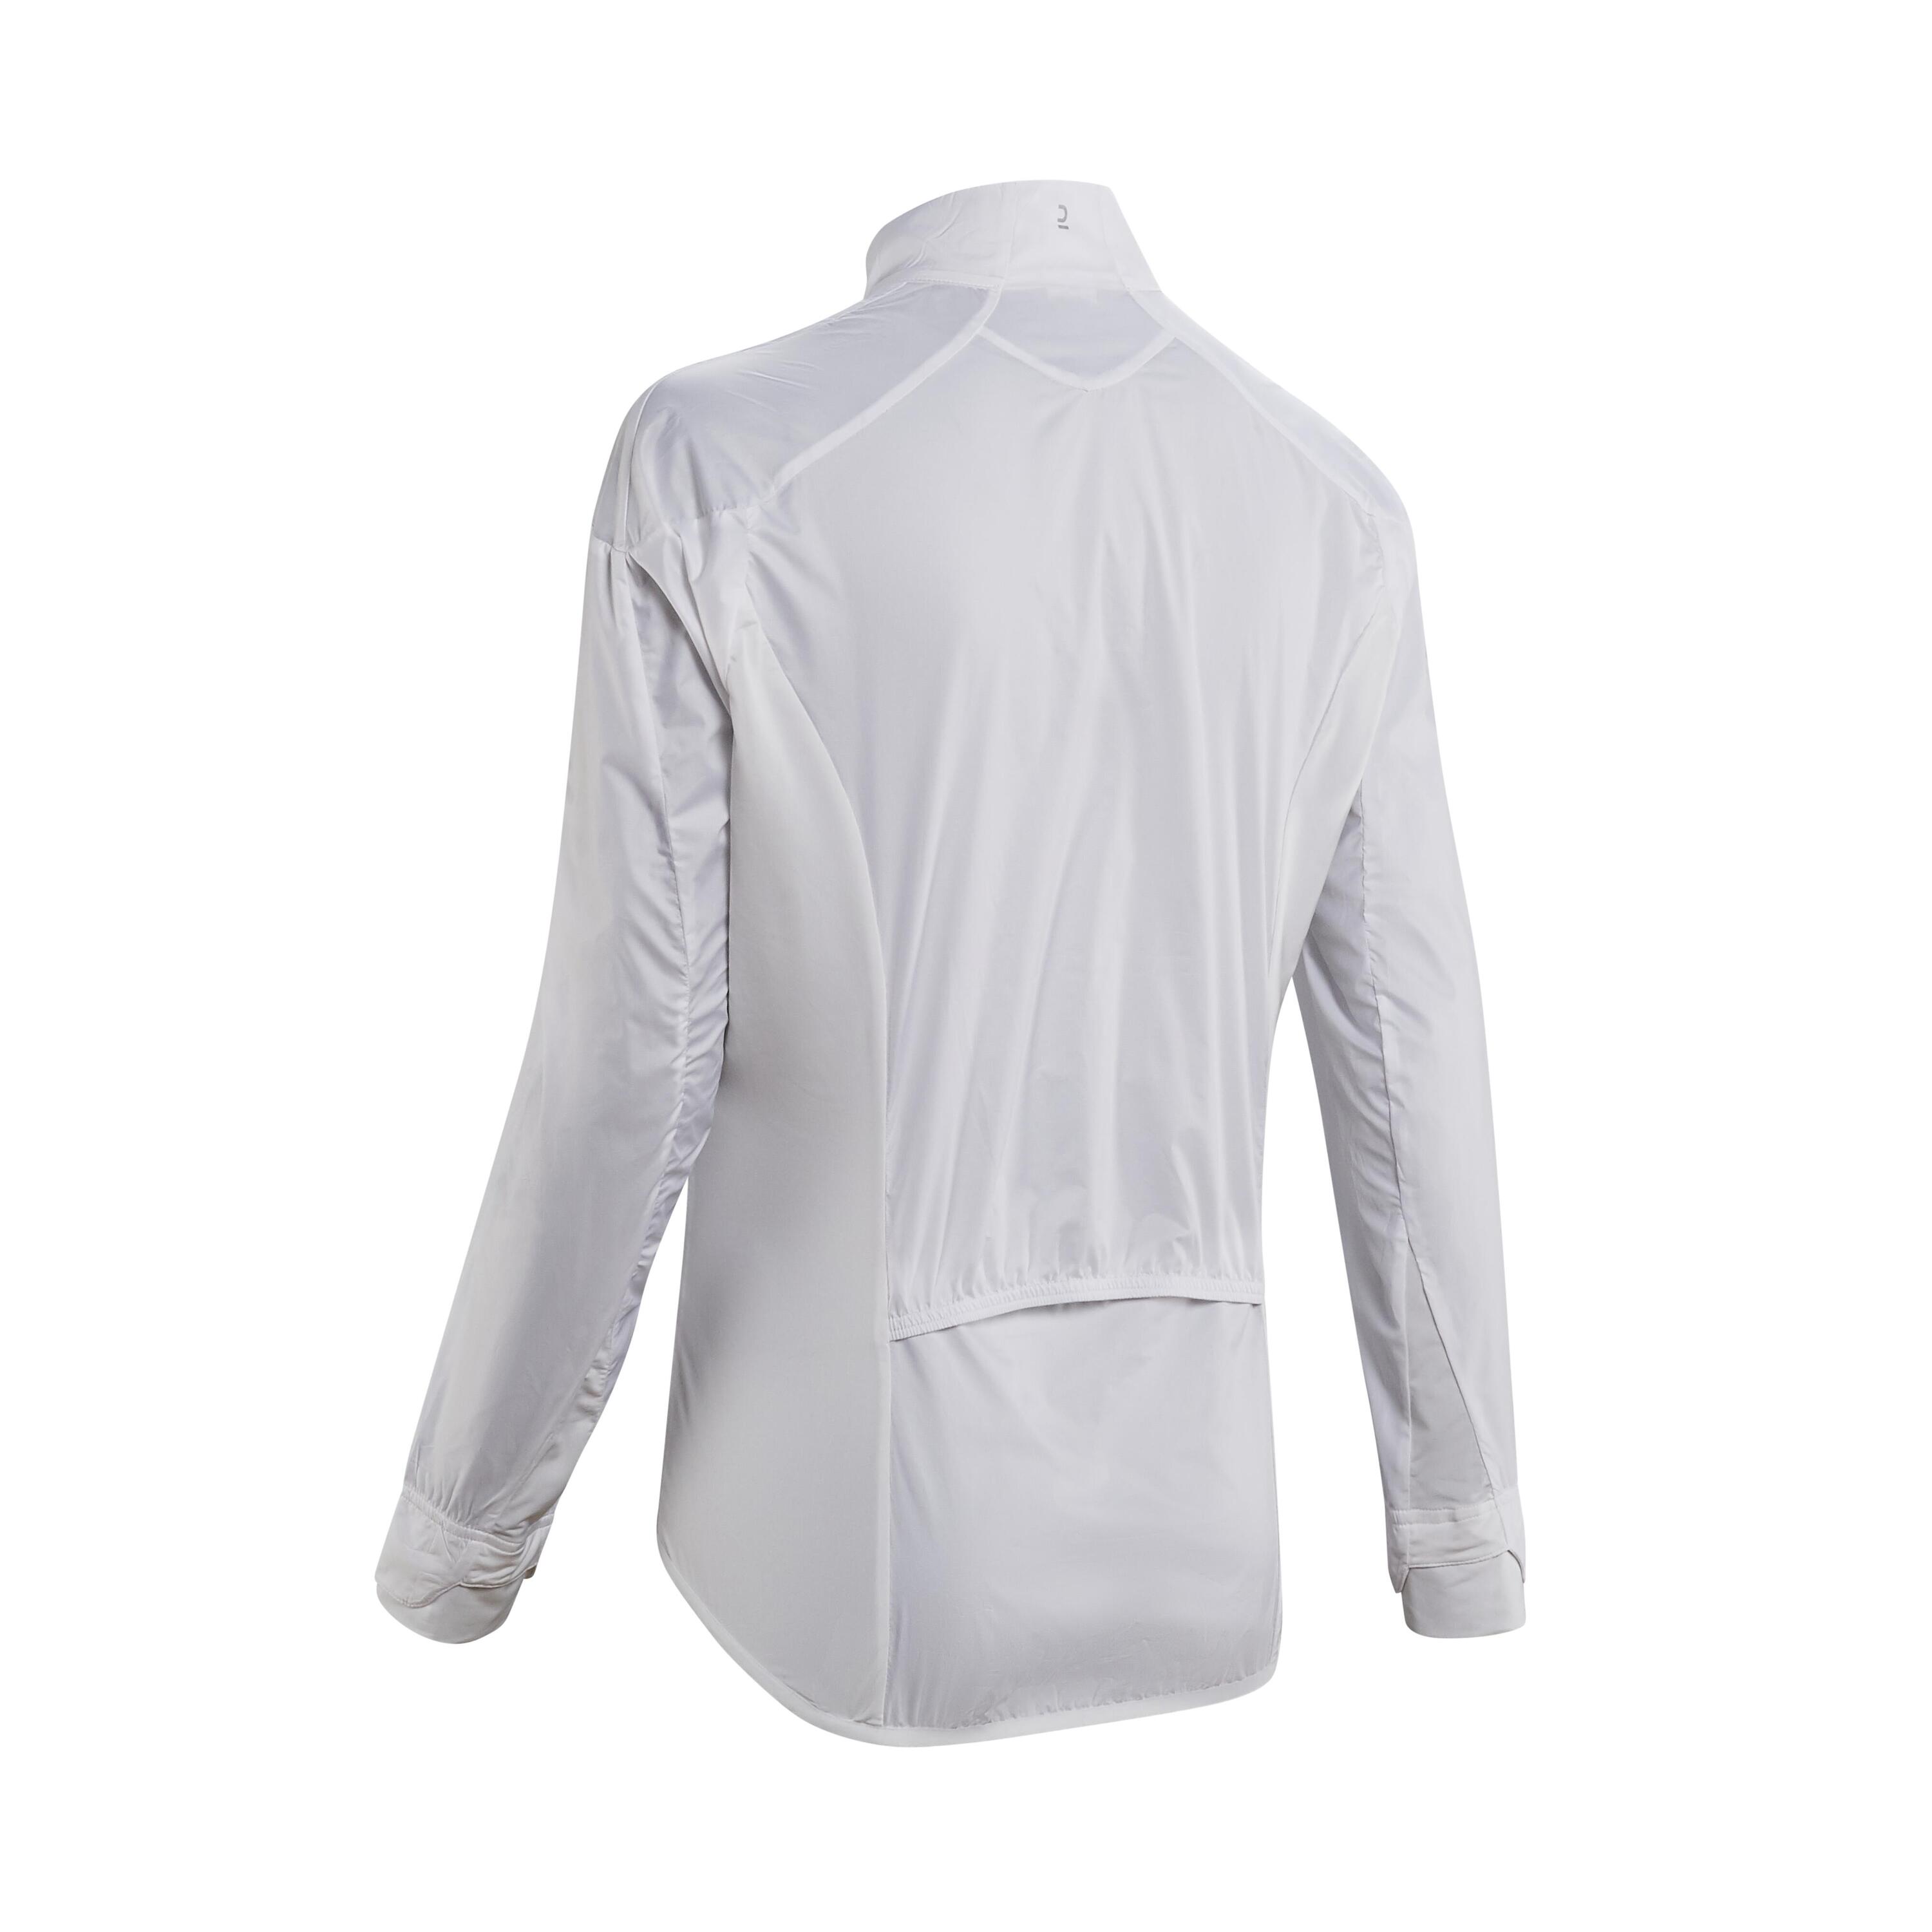 Women's Cycling Windproof Jacket Ultralight - White 2/5